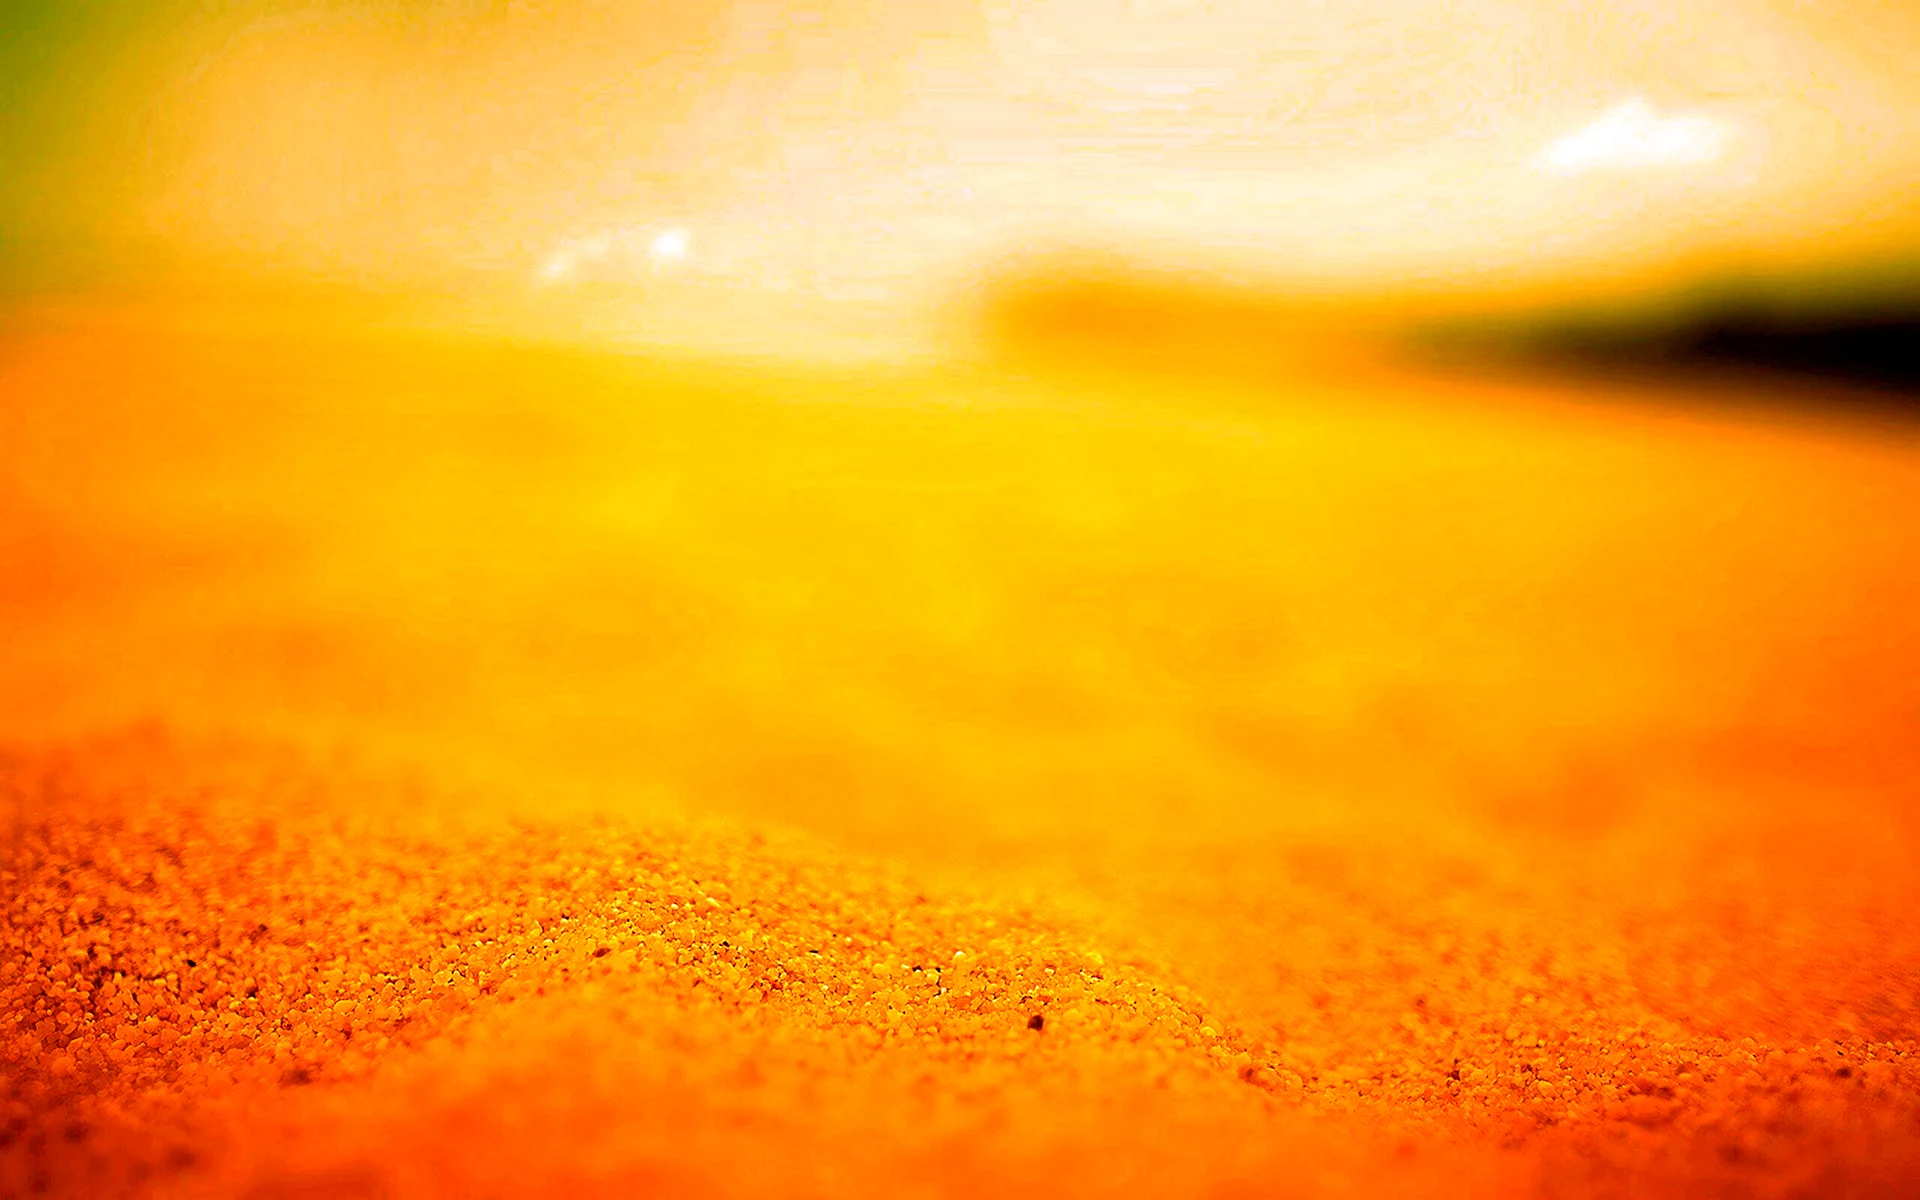 Желтый песок